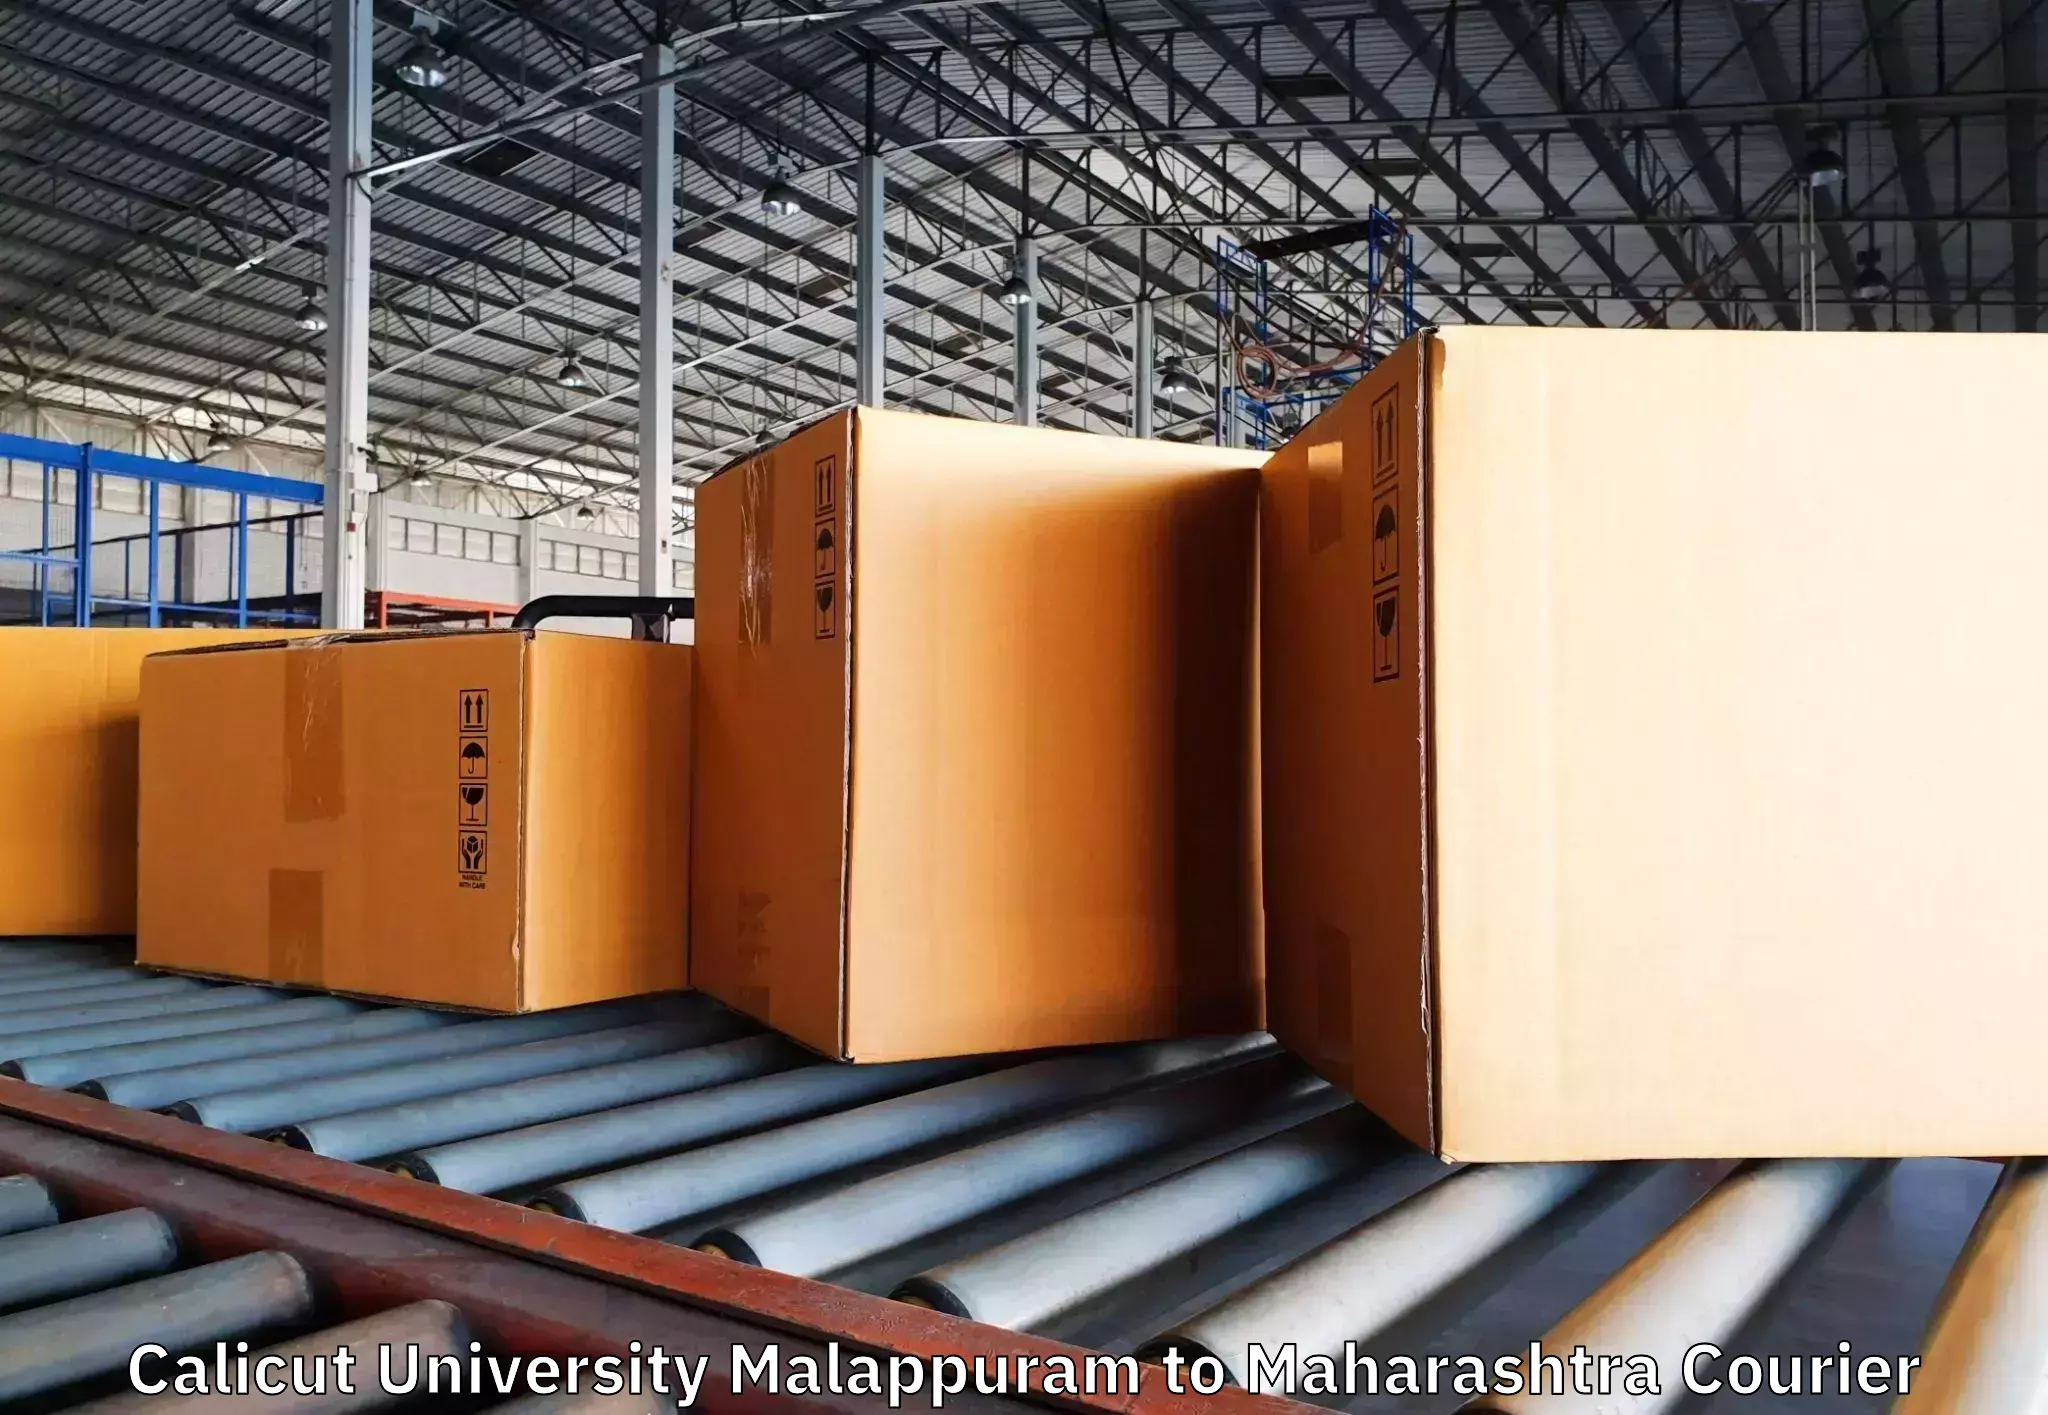 Expert moving and storage Calicut University Malappuram to Lonere